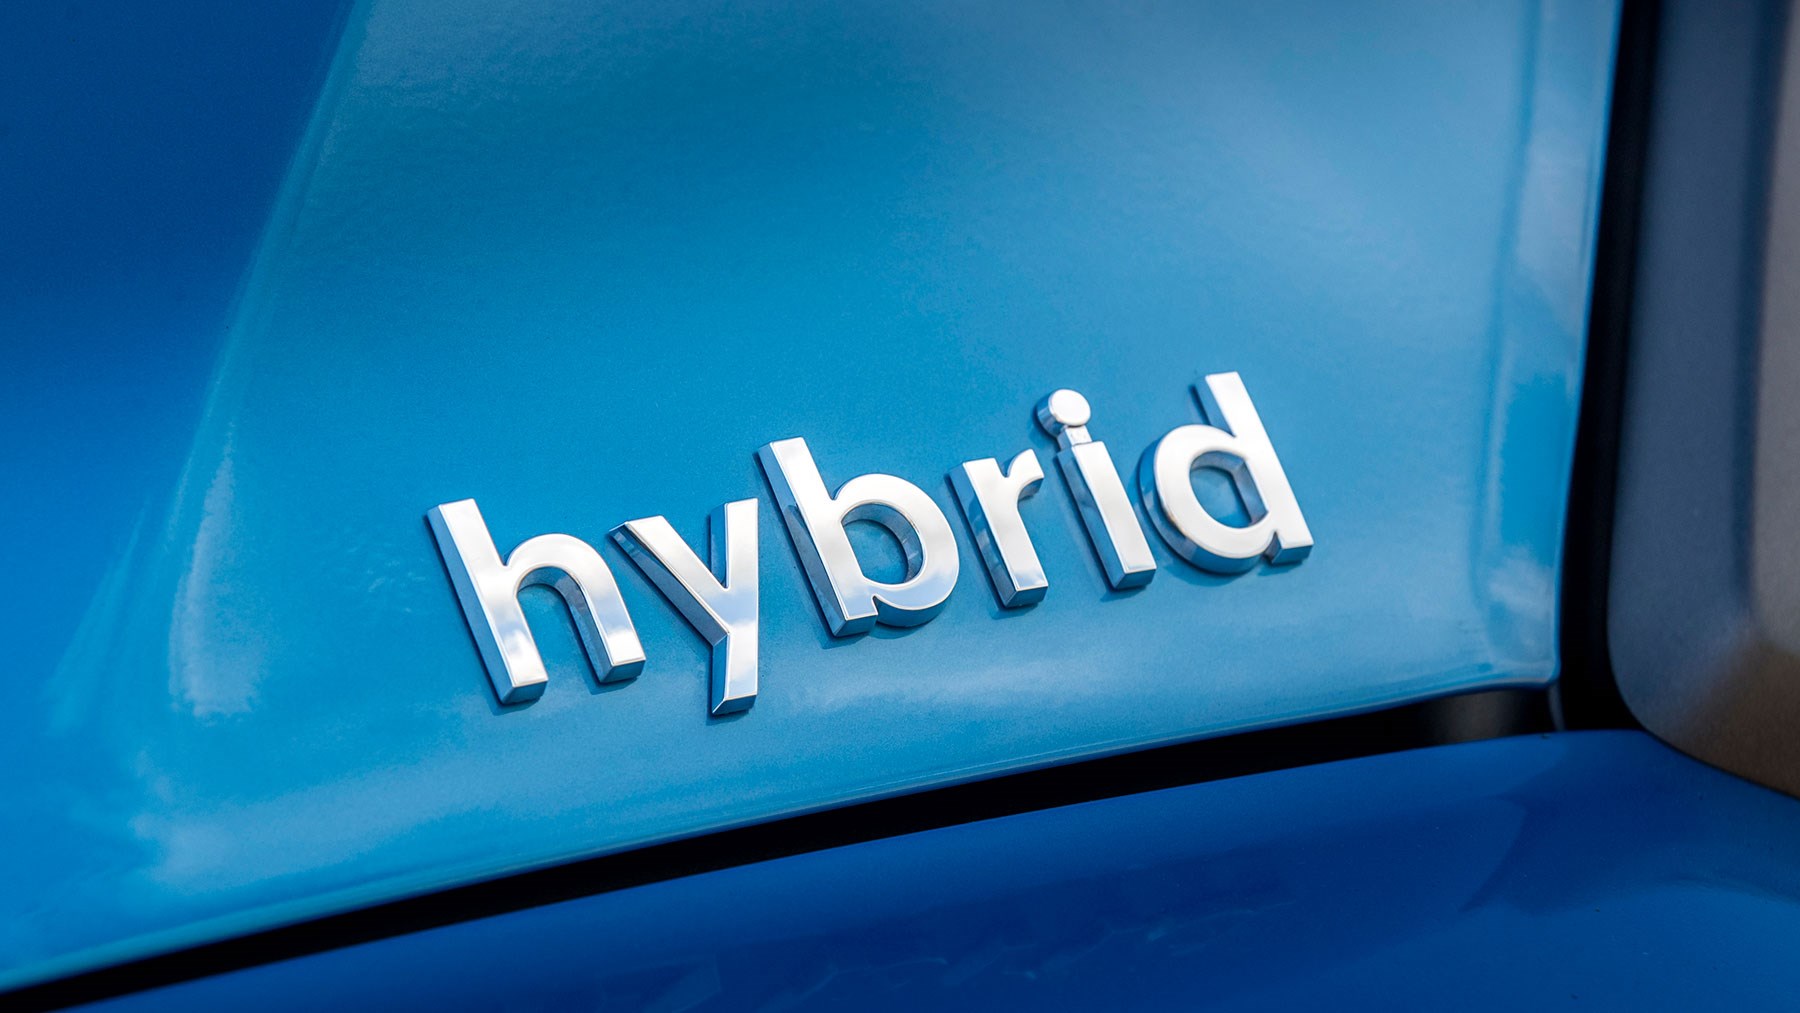 cheap hybrids